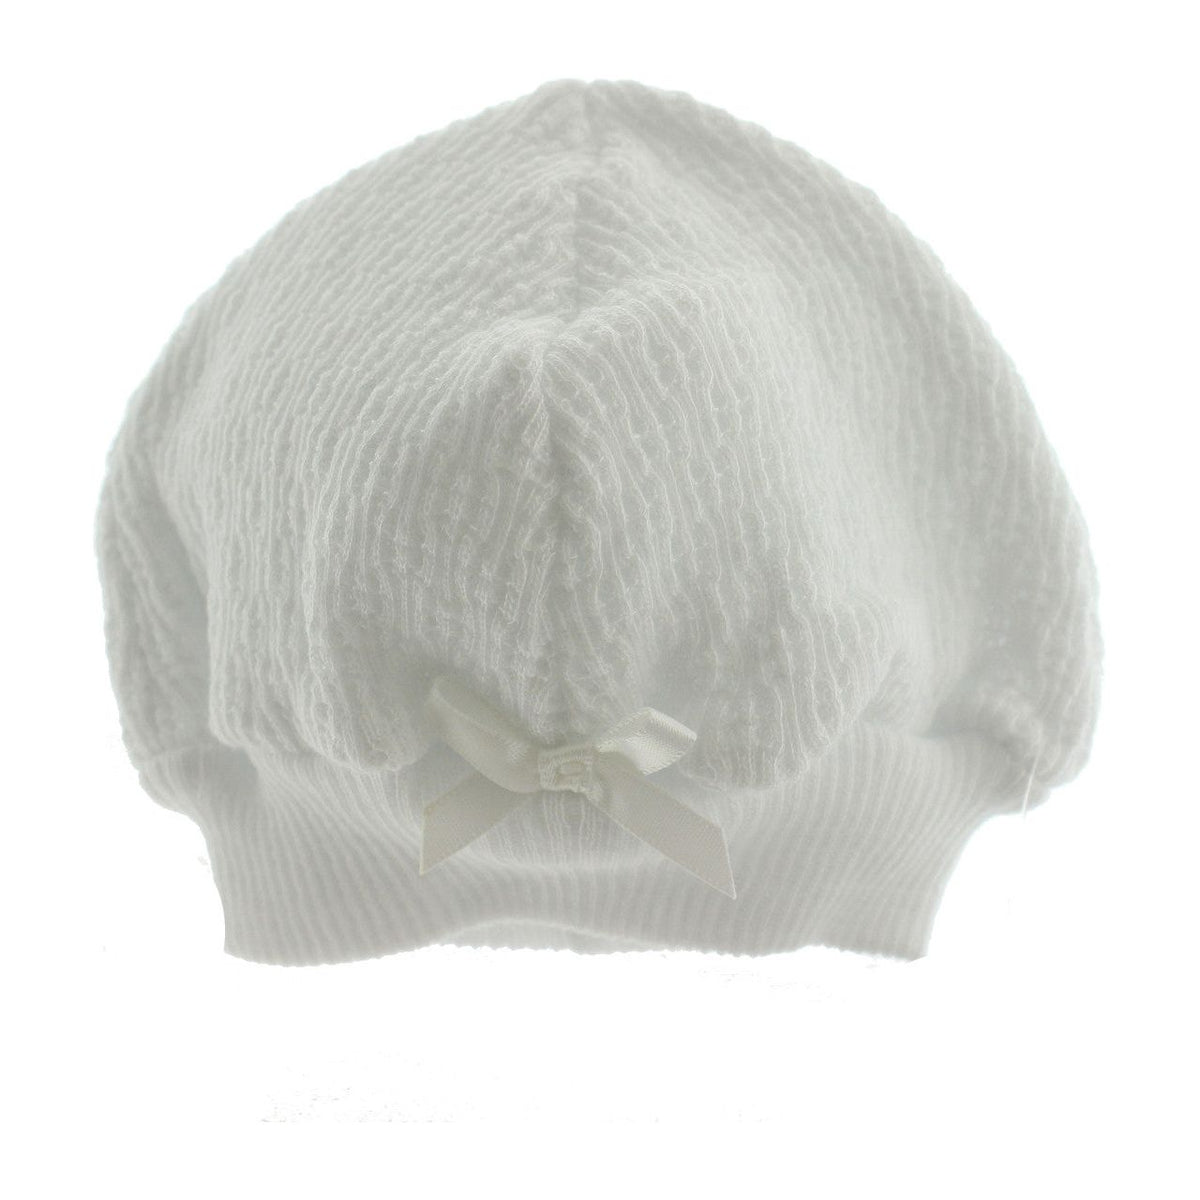 White Unisex Baby Beanie Hat with Satin Bow